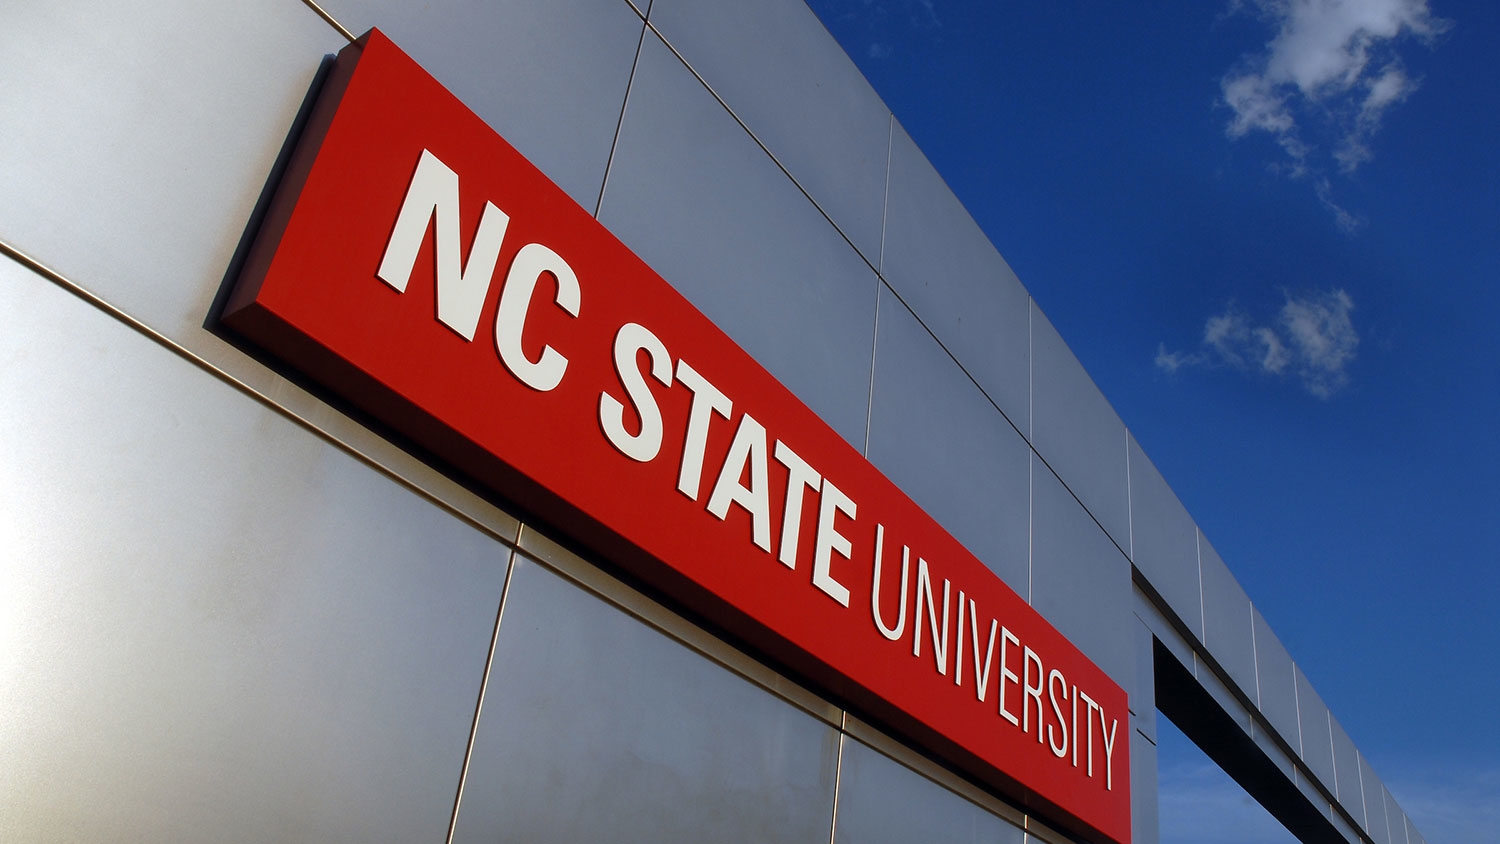 NC State alumni gateway